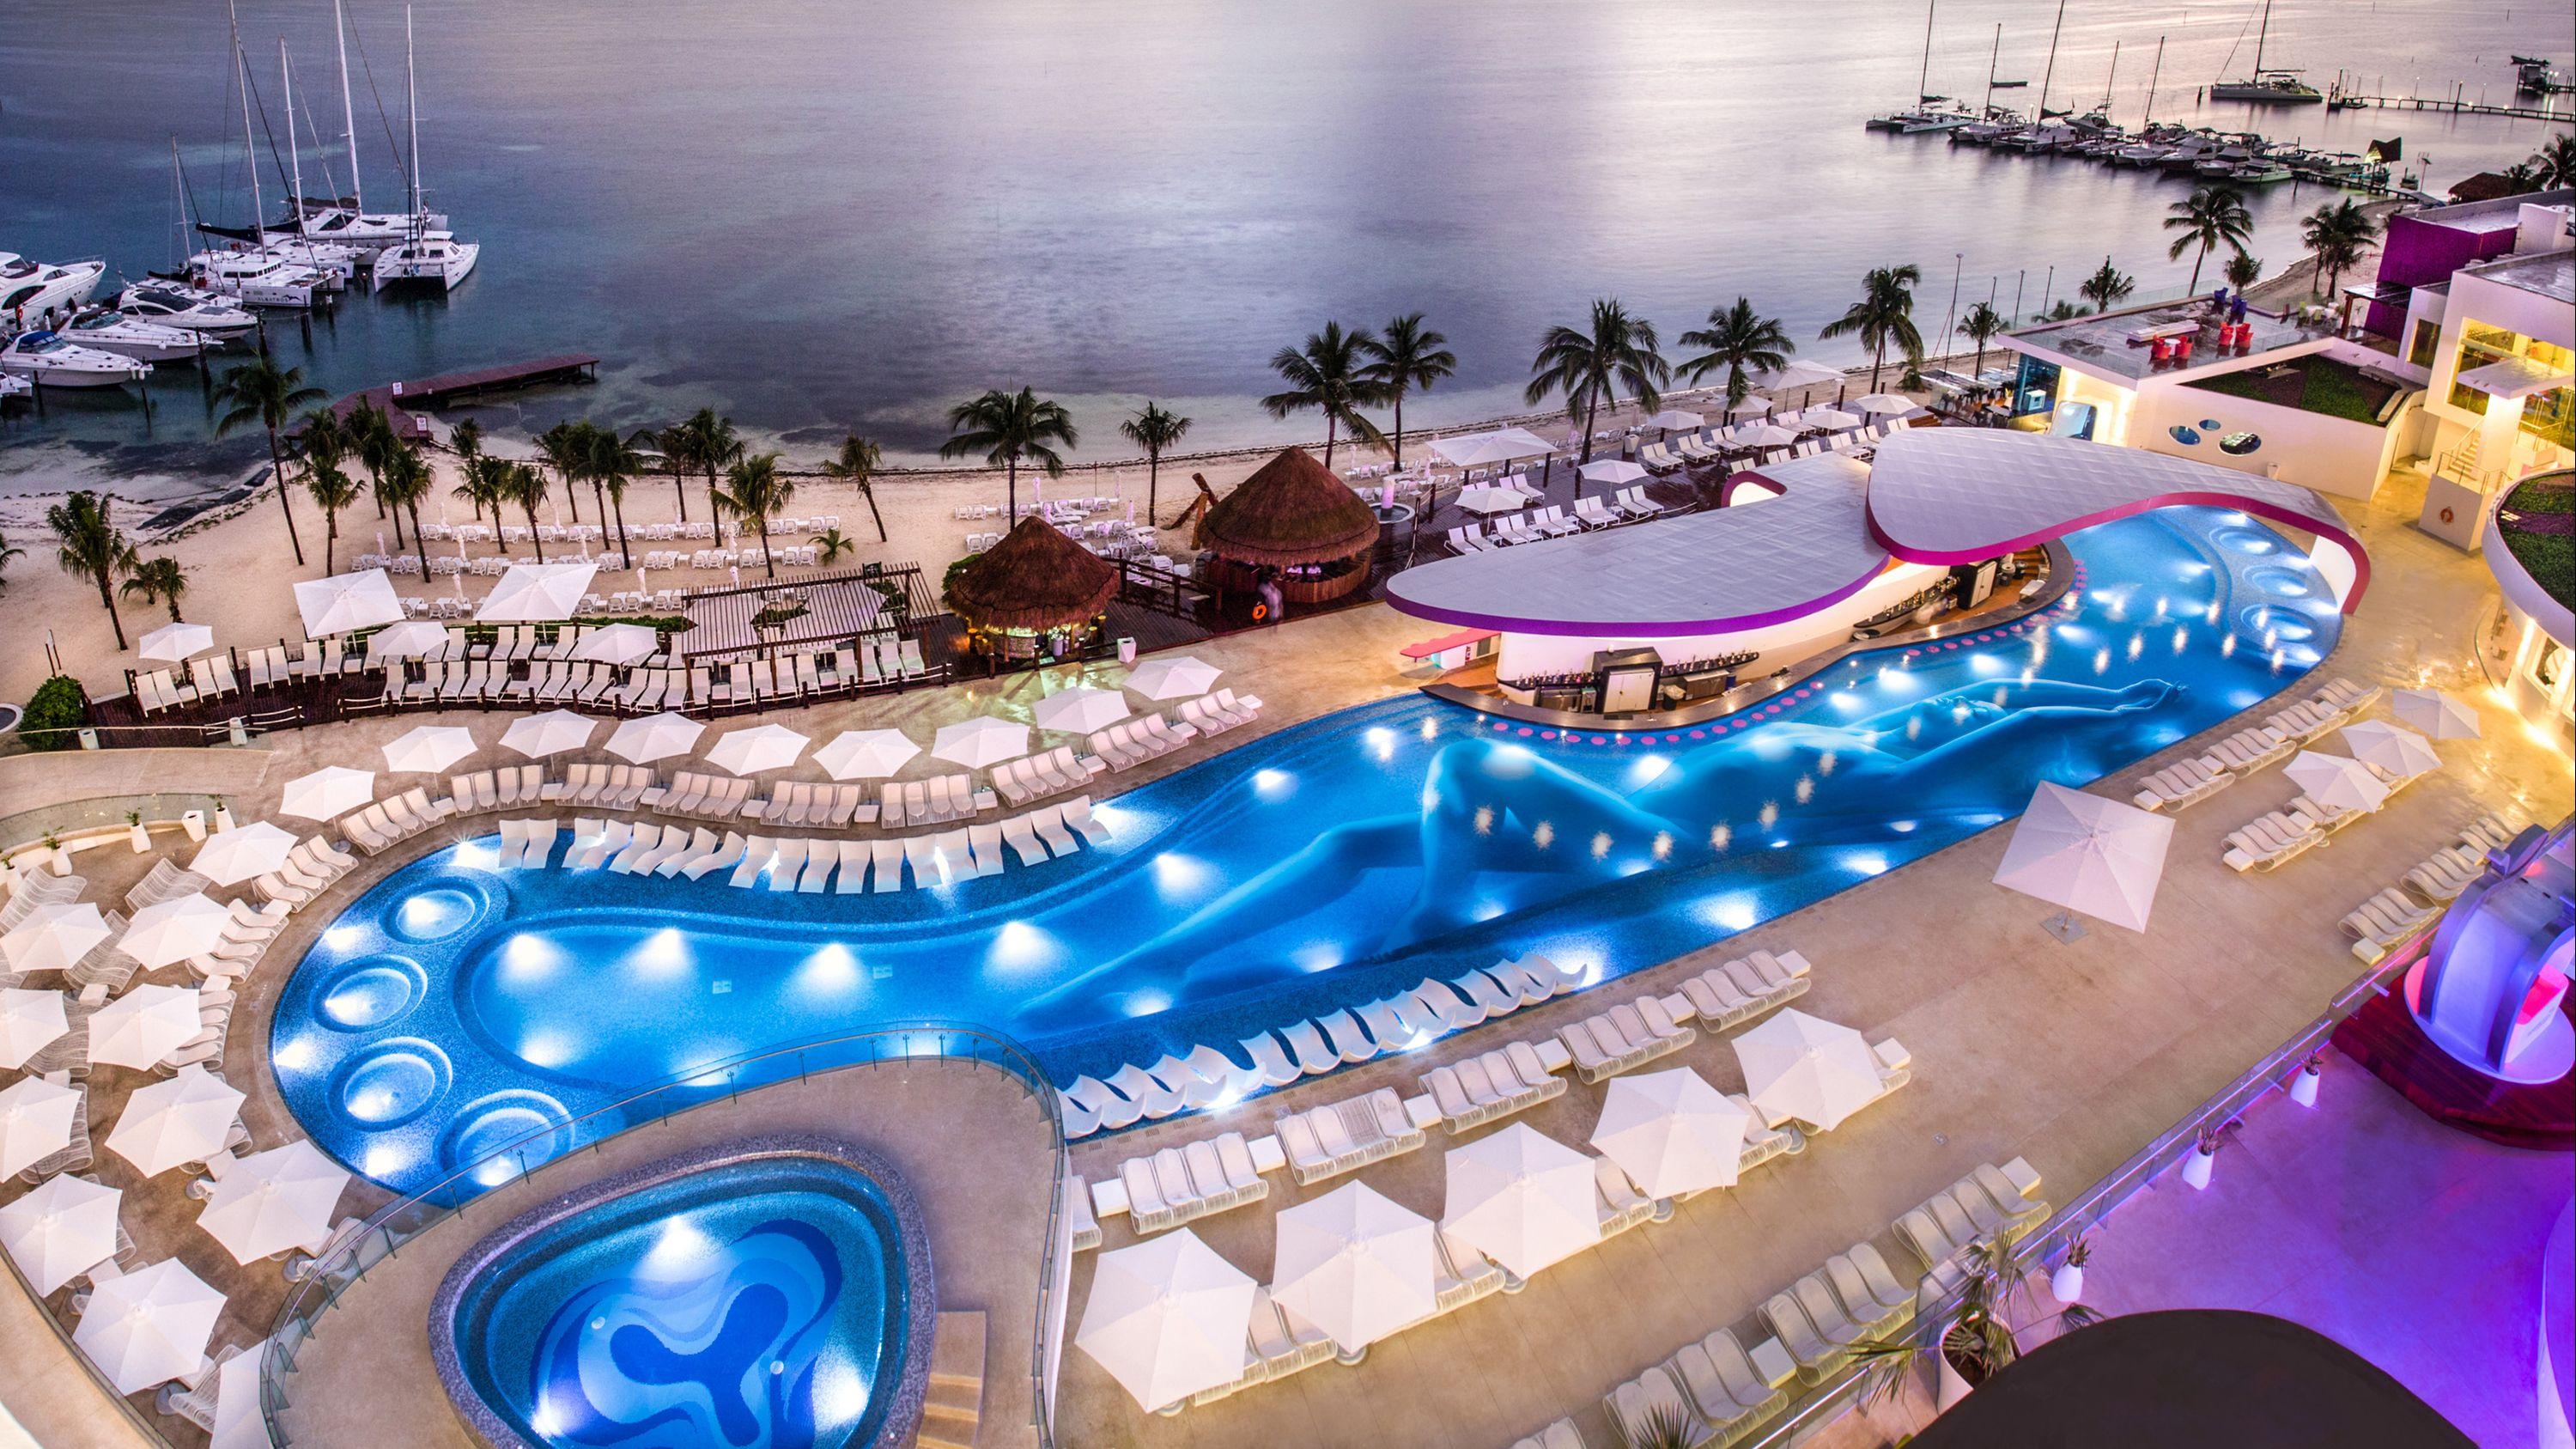 Temptation Cancun Resort from